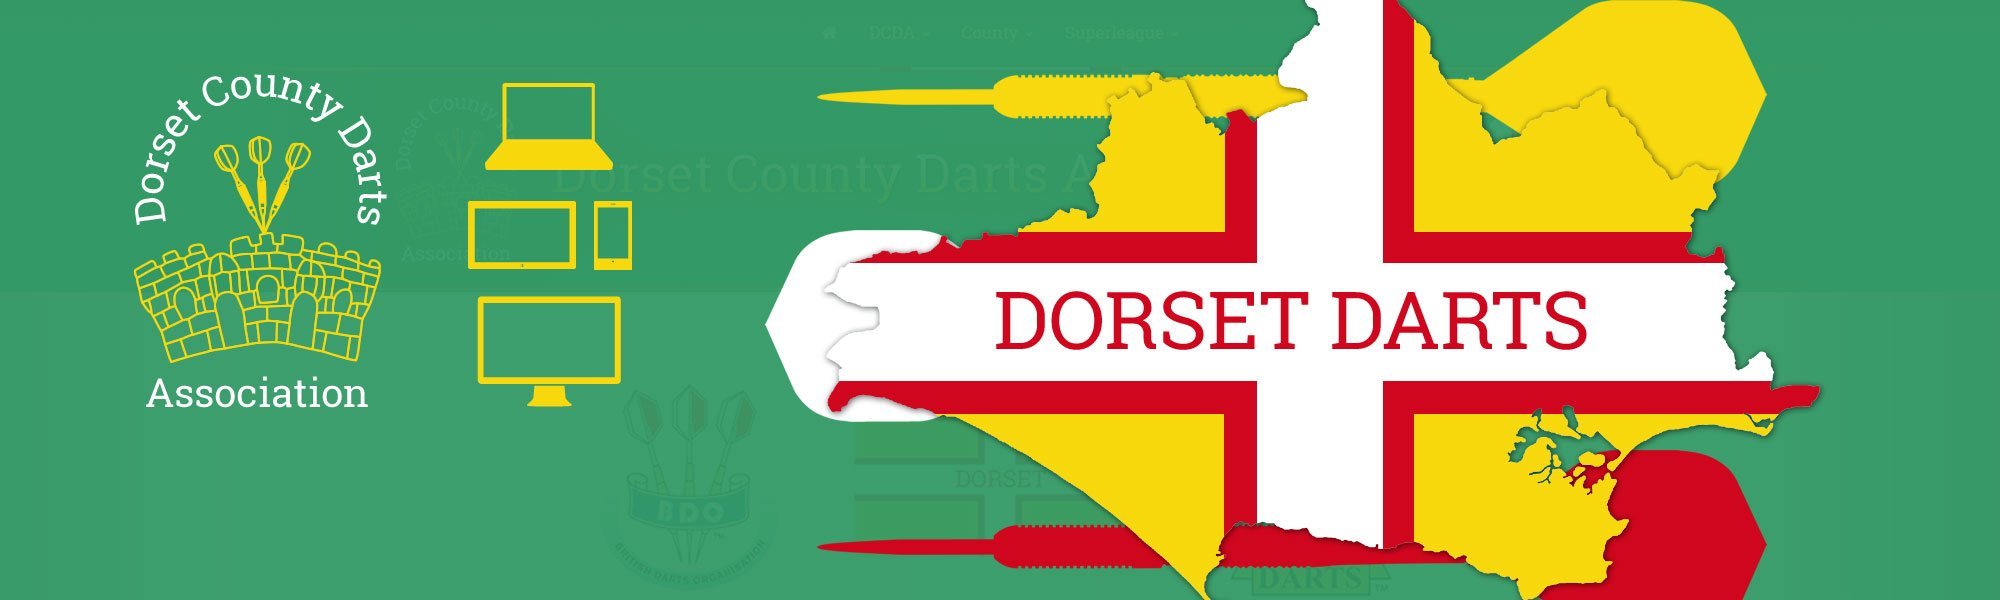 Dorset County Darts Association Website Redesign - Banner